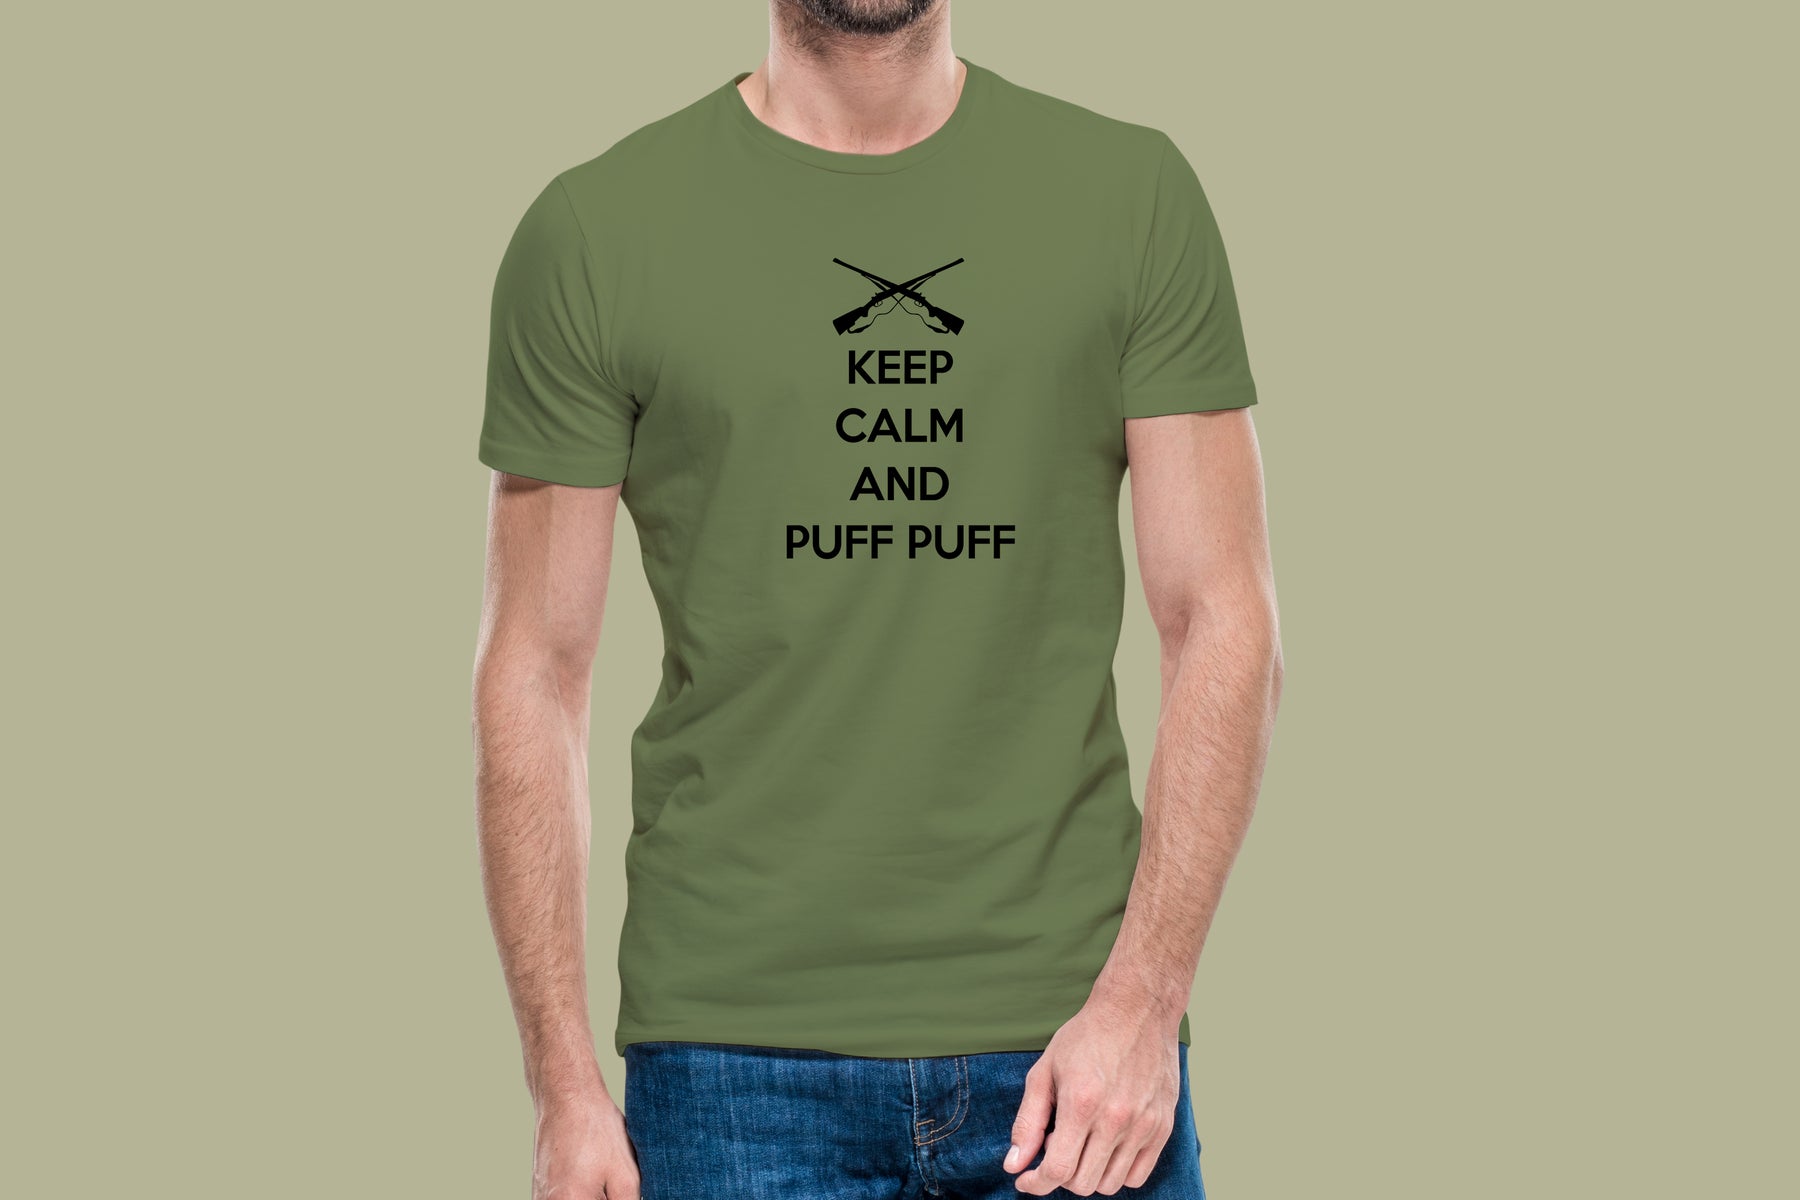 Keep calm and puff puff